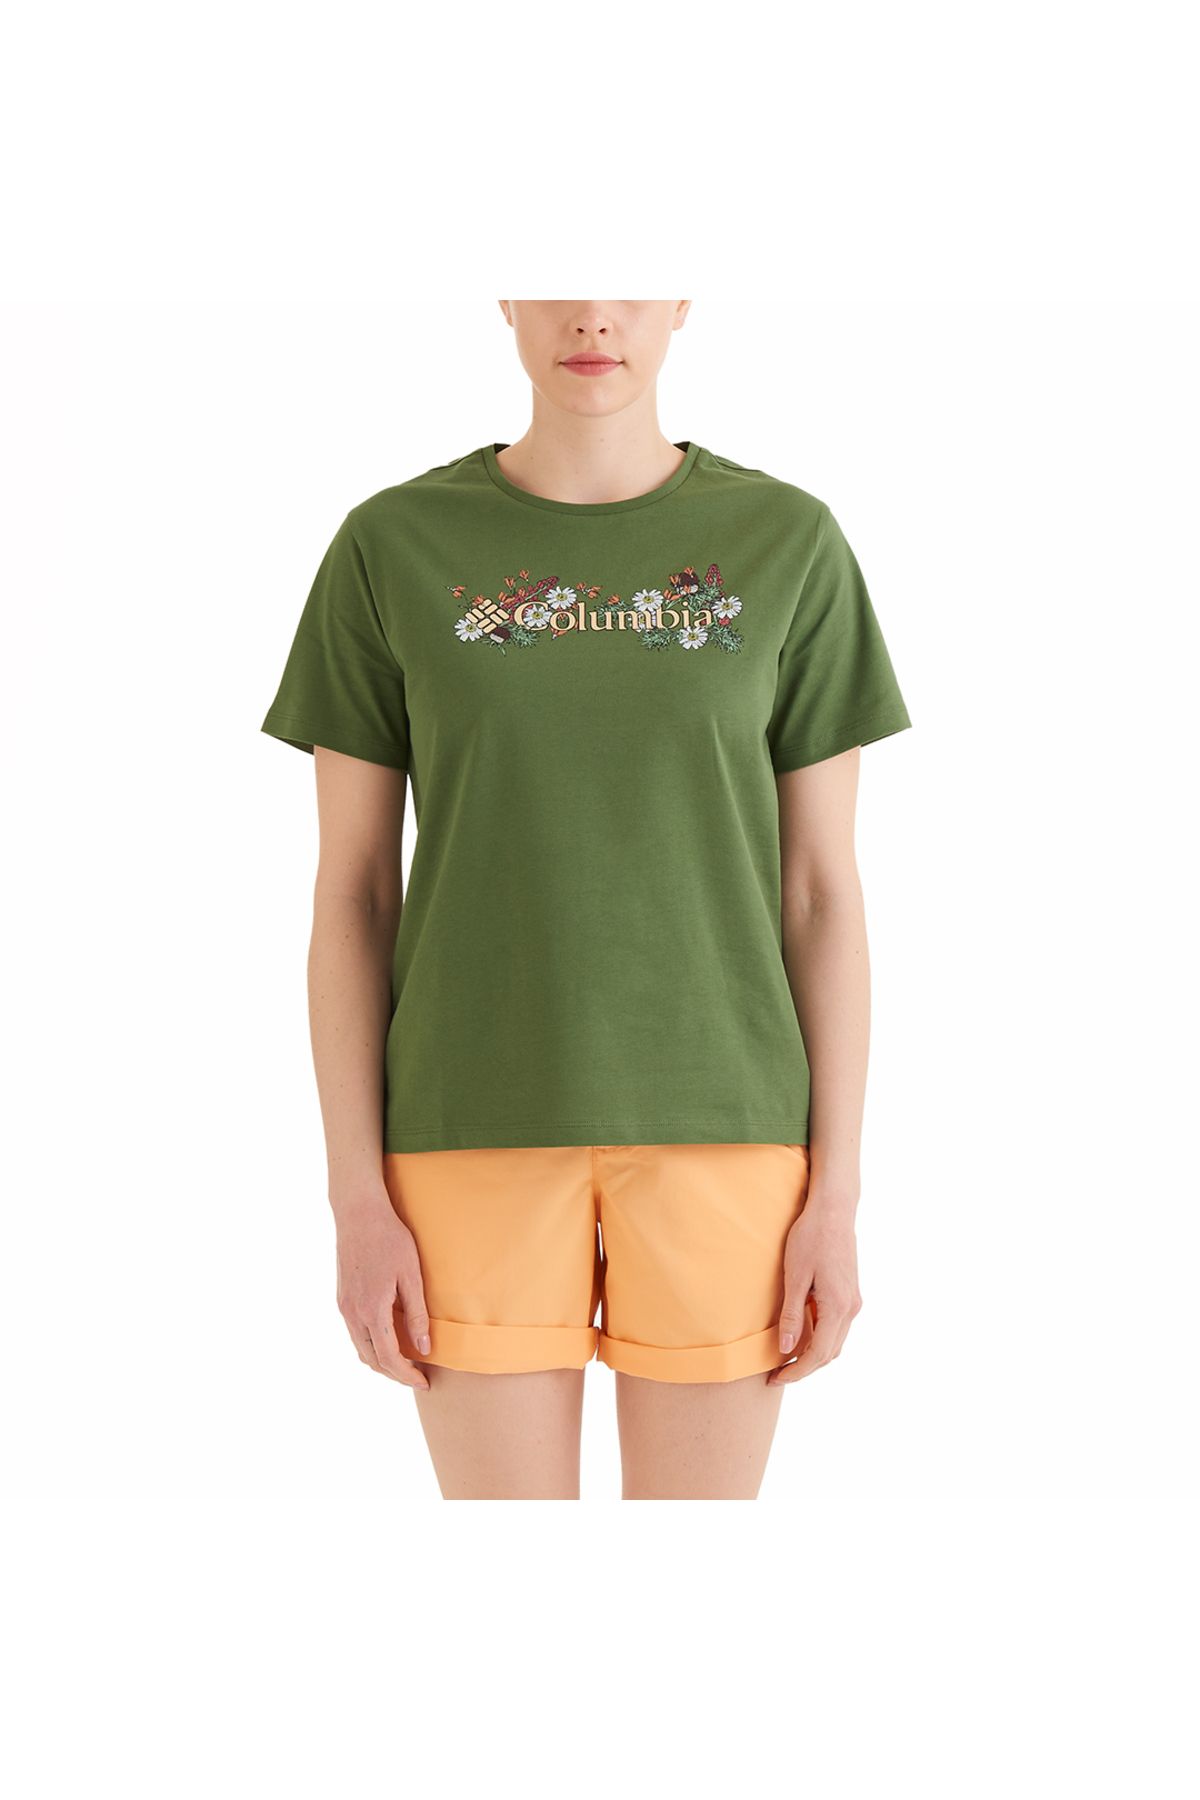 Columbia Kadın Kısa Kollu T-shirt